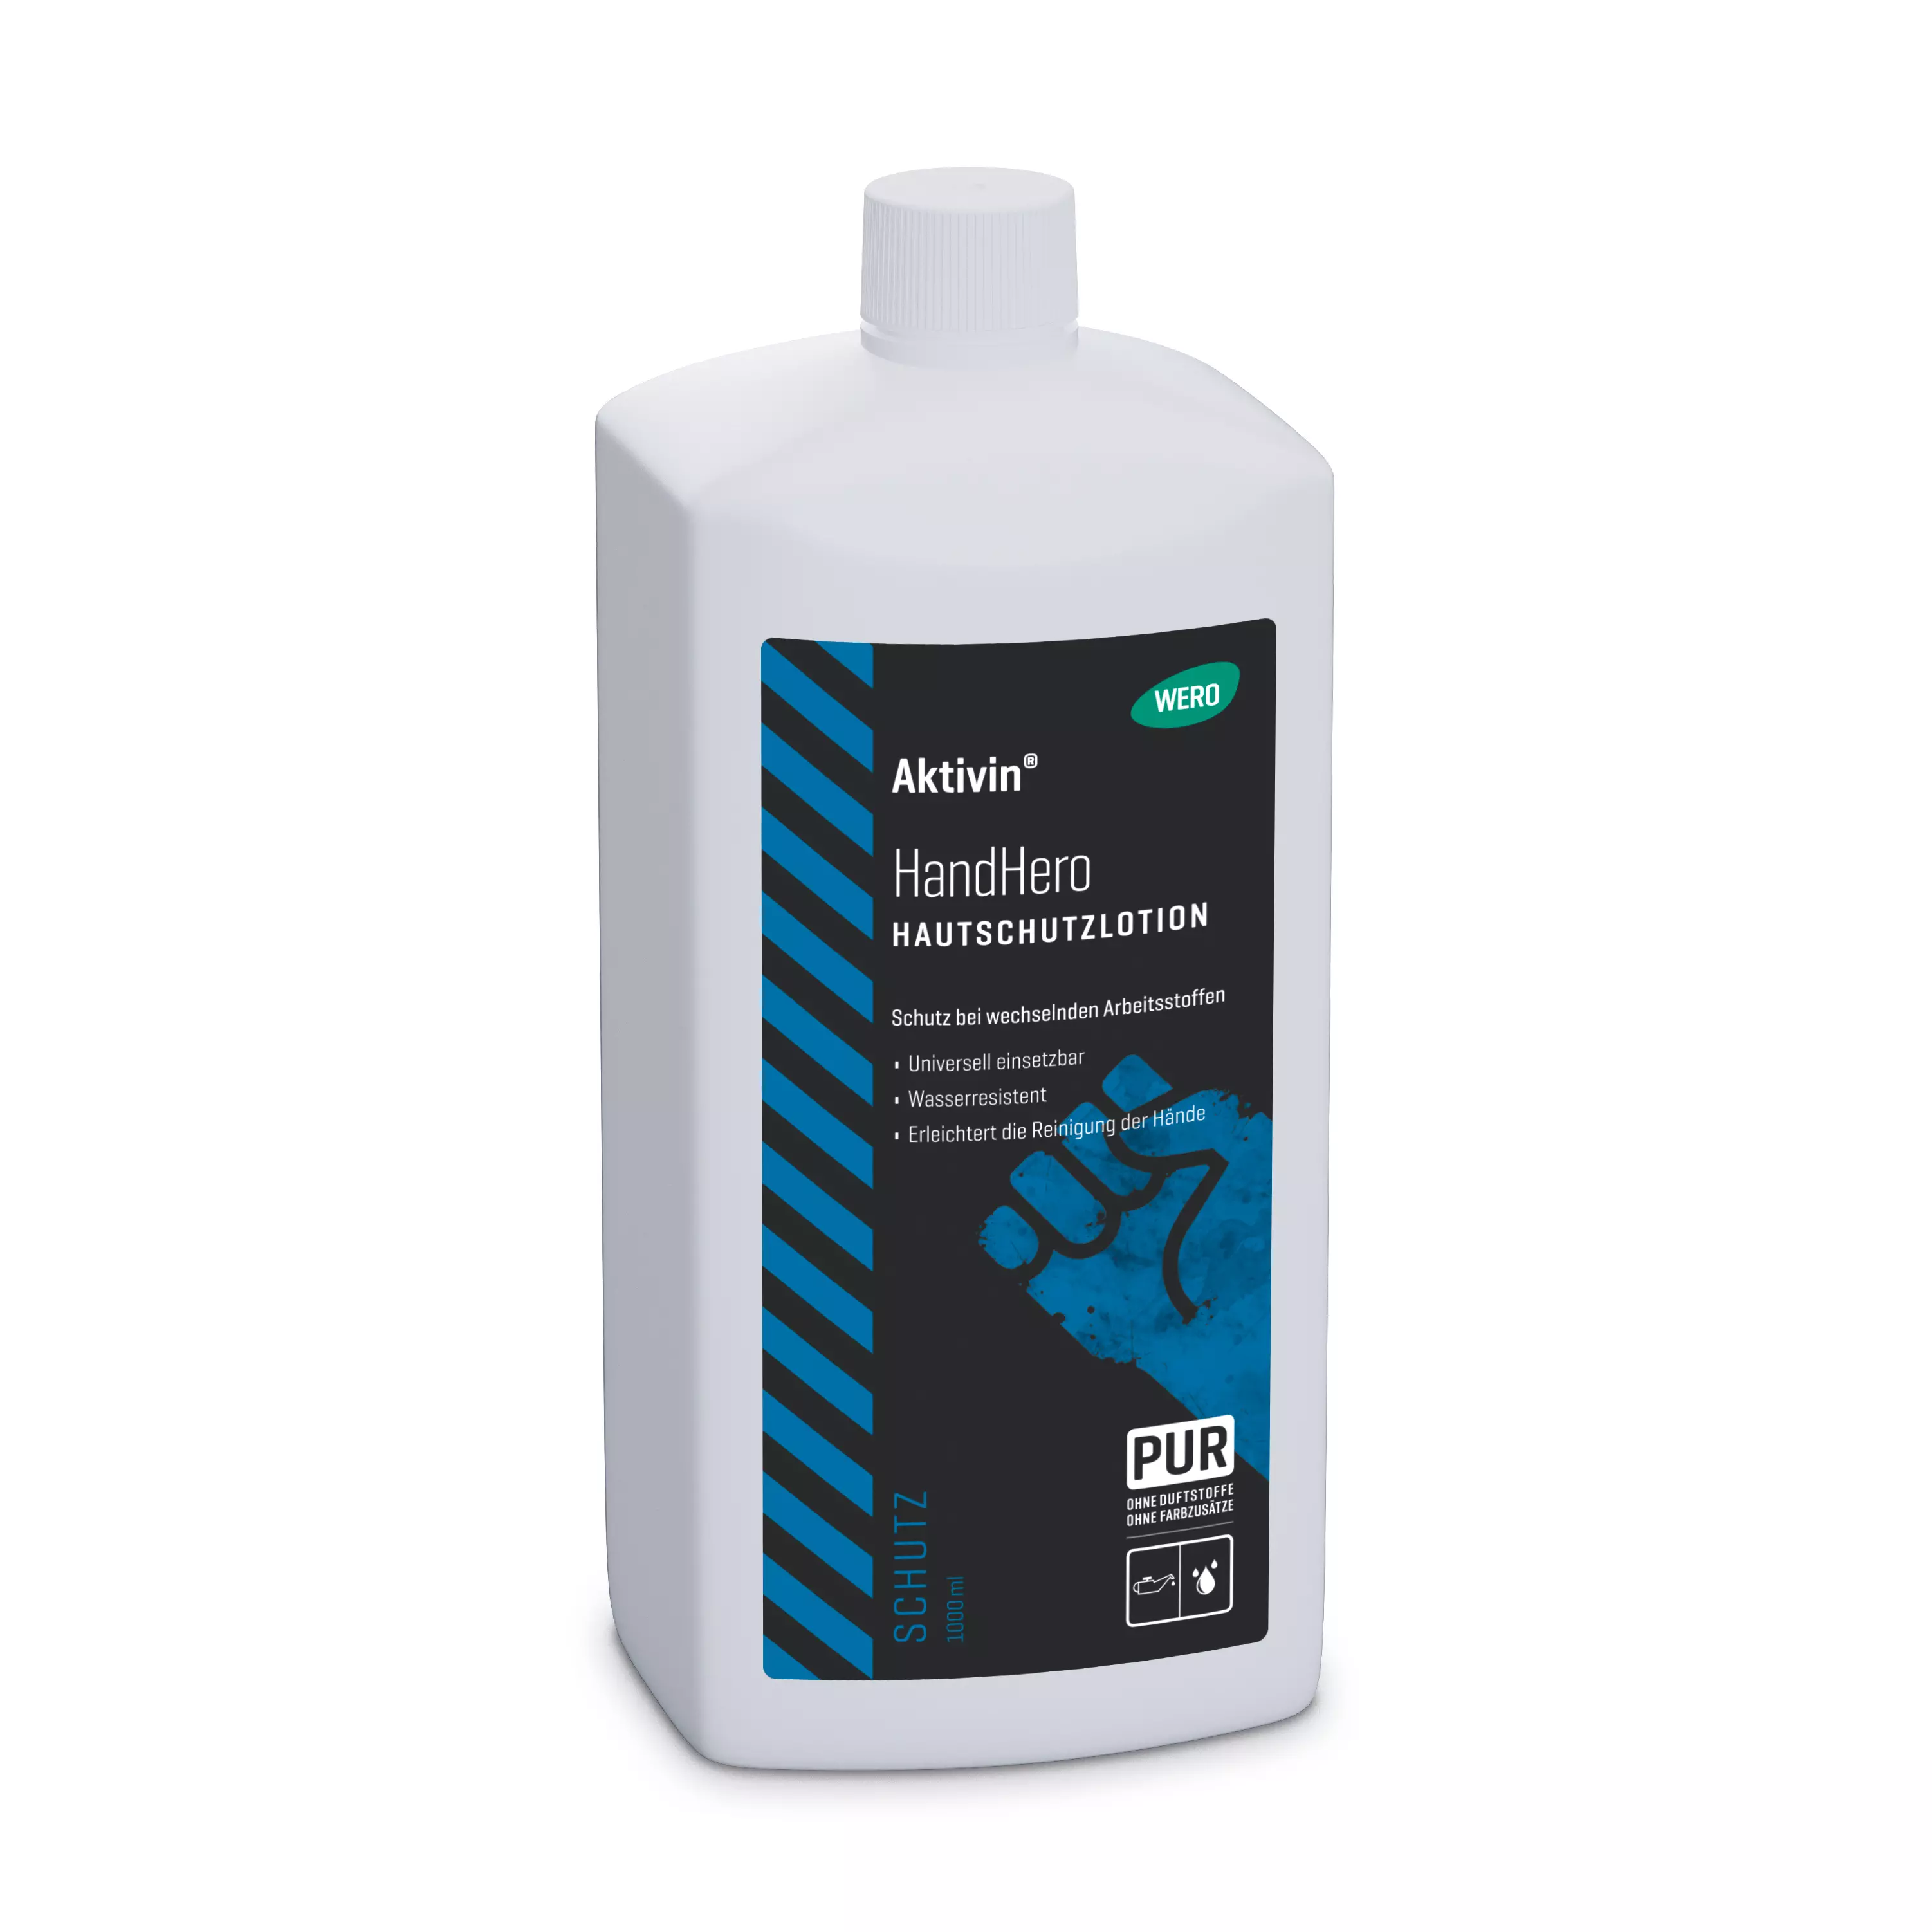 Hautschutzlotion Aktivin® HandHero - Euroflasche, 1.000 ml